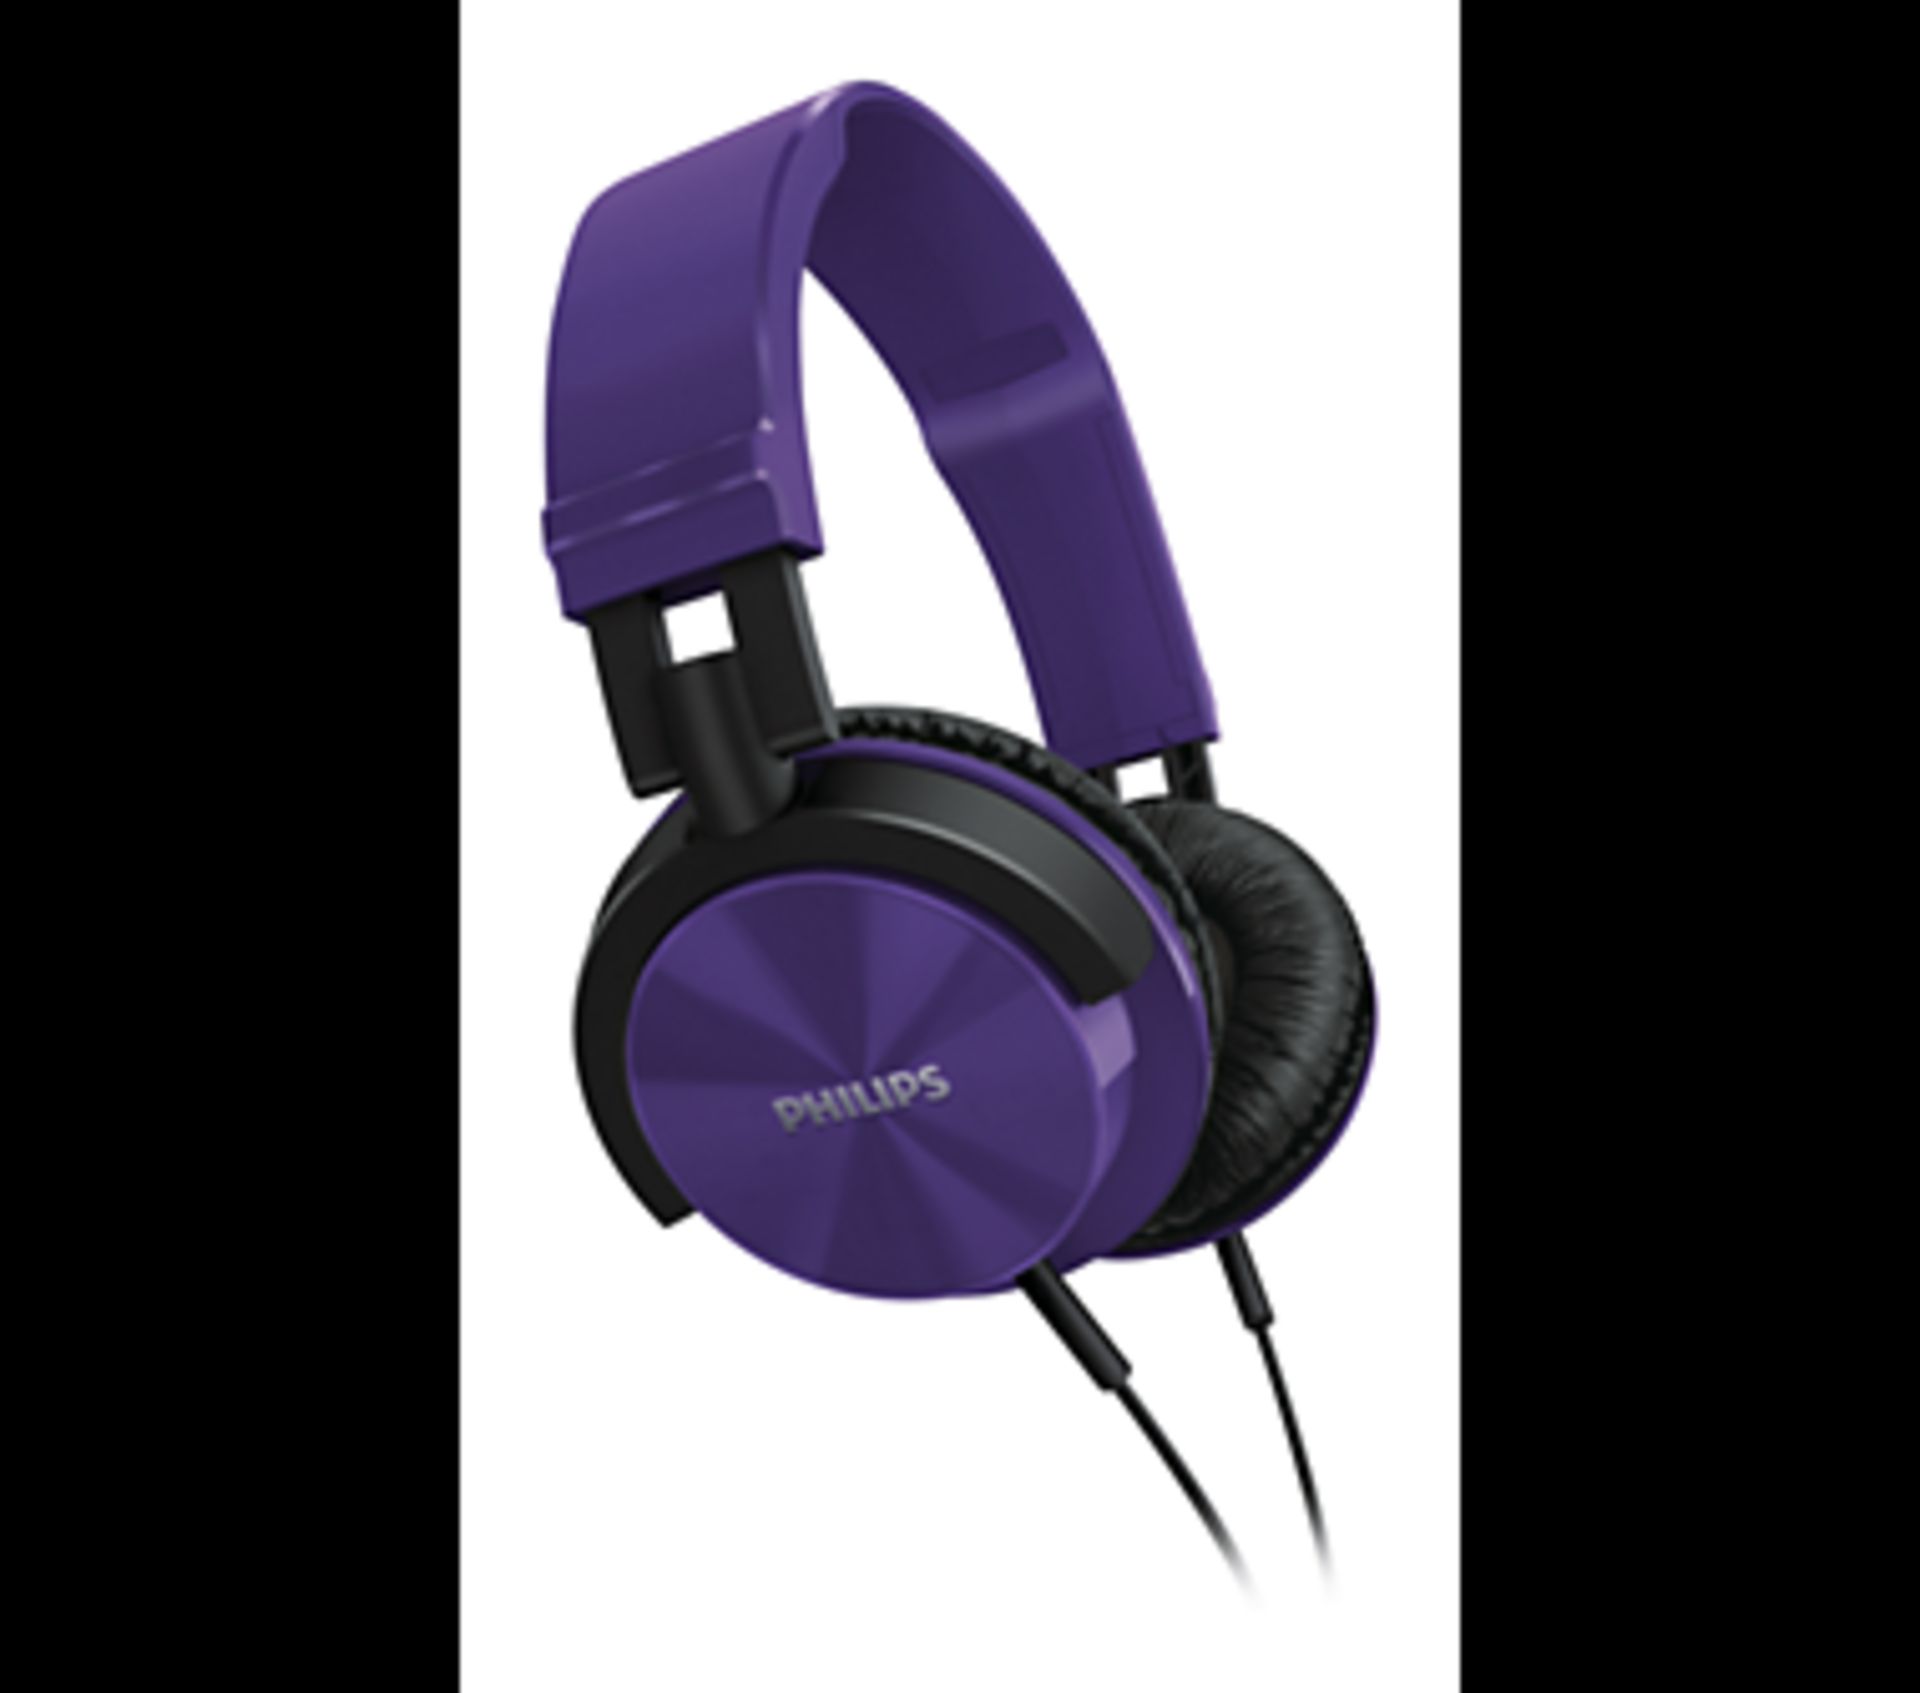 V *TRADE QTY* Brand New Philips SHL3000pp DJ Headphones RRP £20 X 5 YOUR BID PRICE TO BE